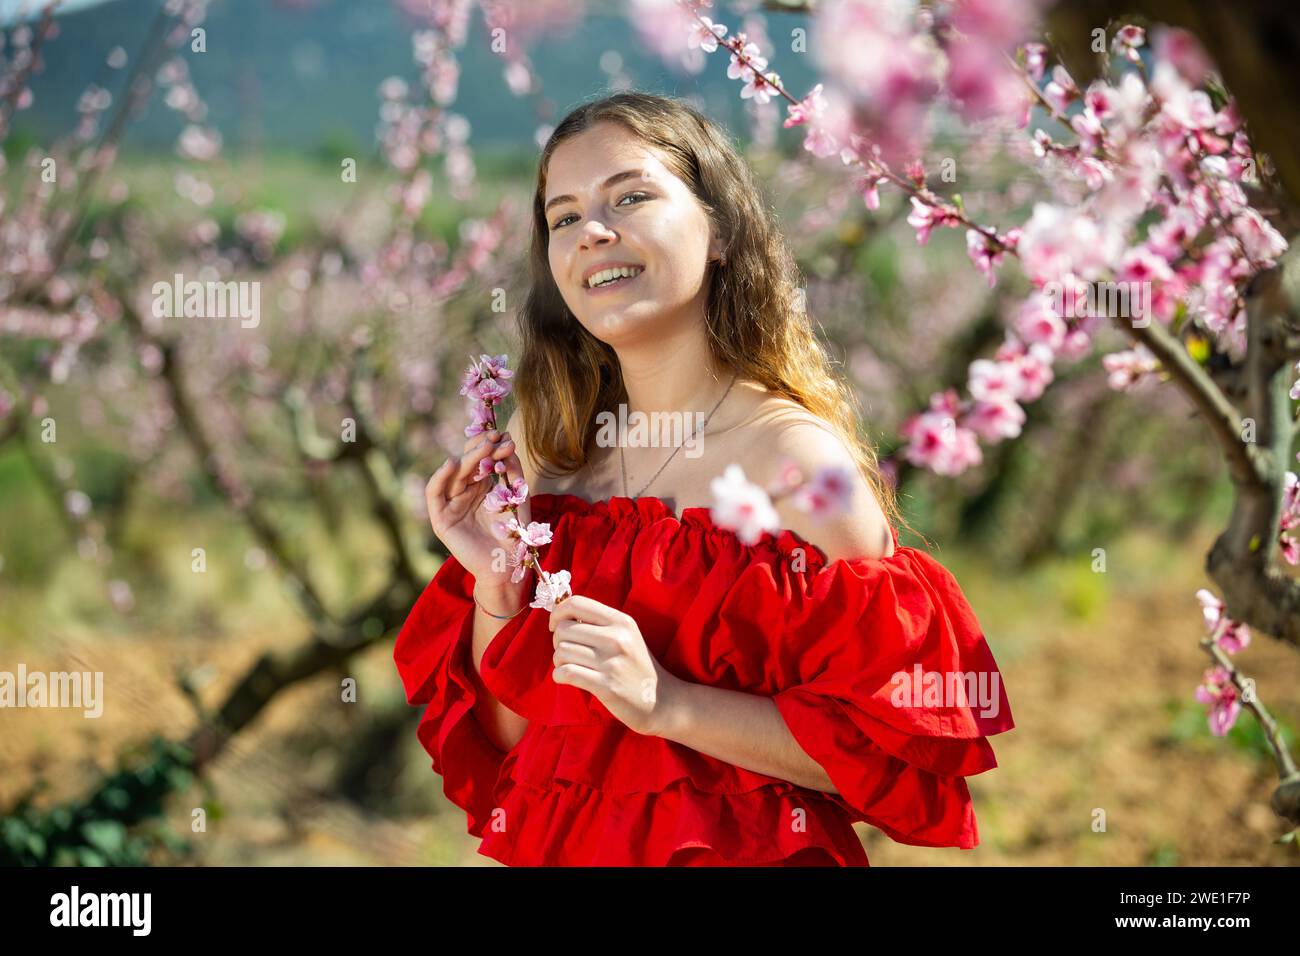 Portrait of happy girl in red dress in blooming spring garden Stock Photo